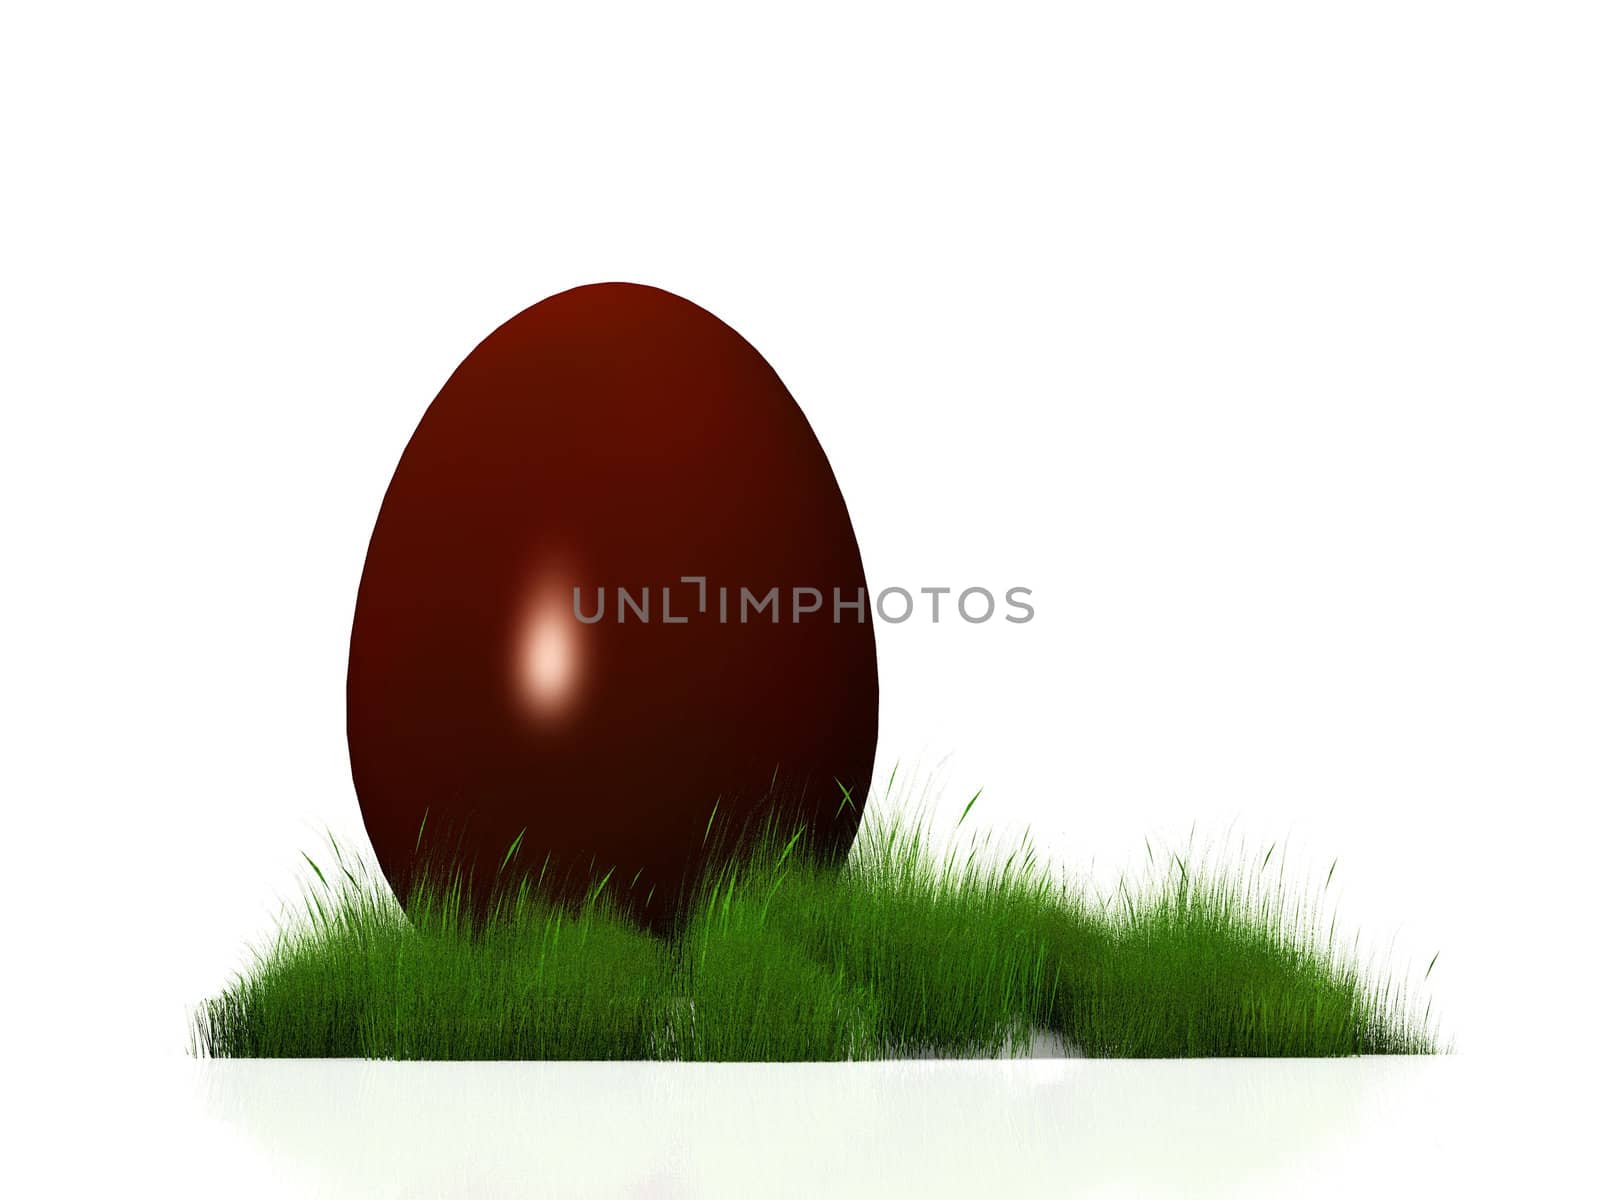 Eastern egg by njaj